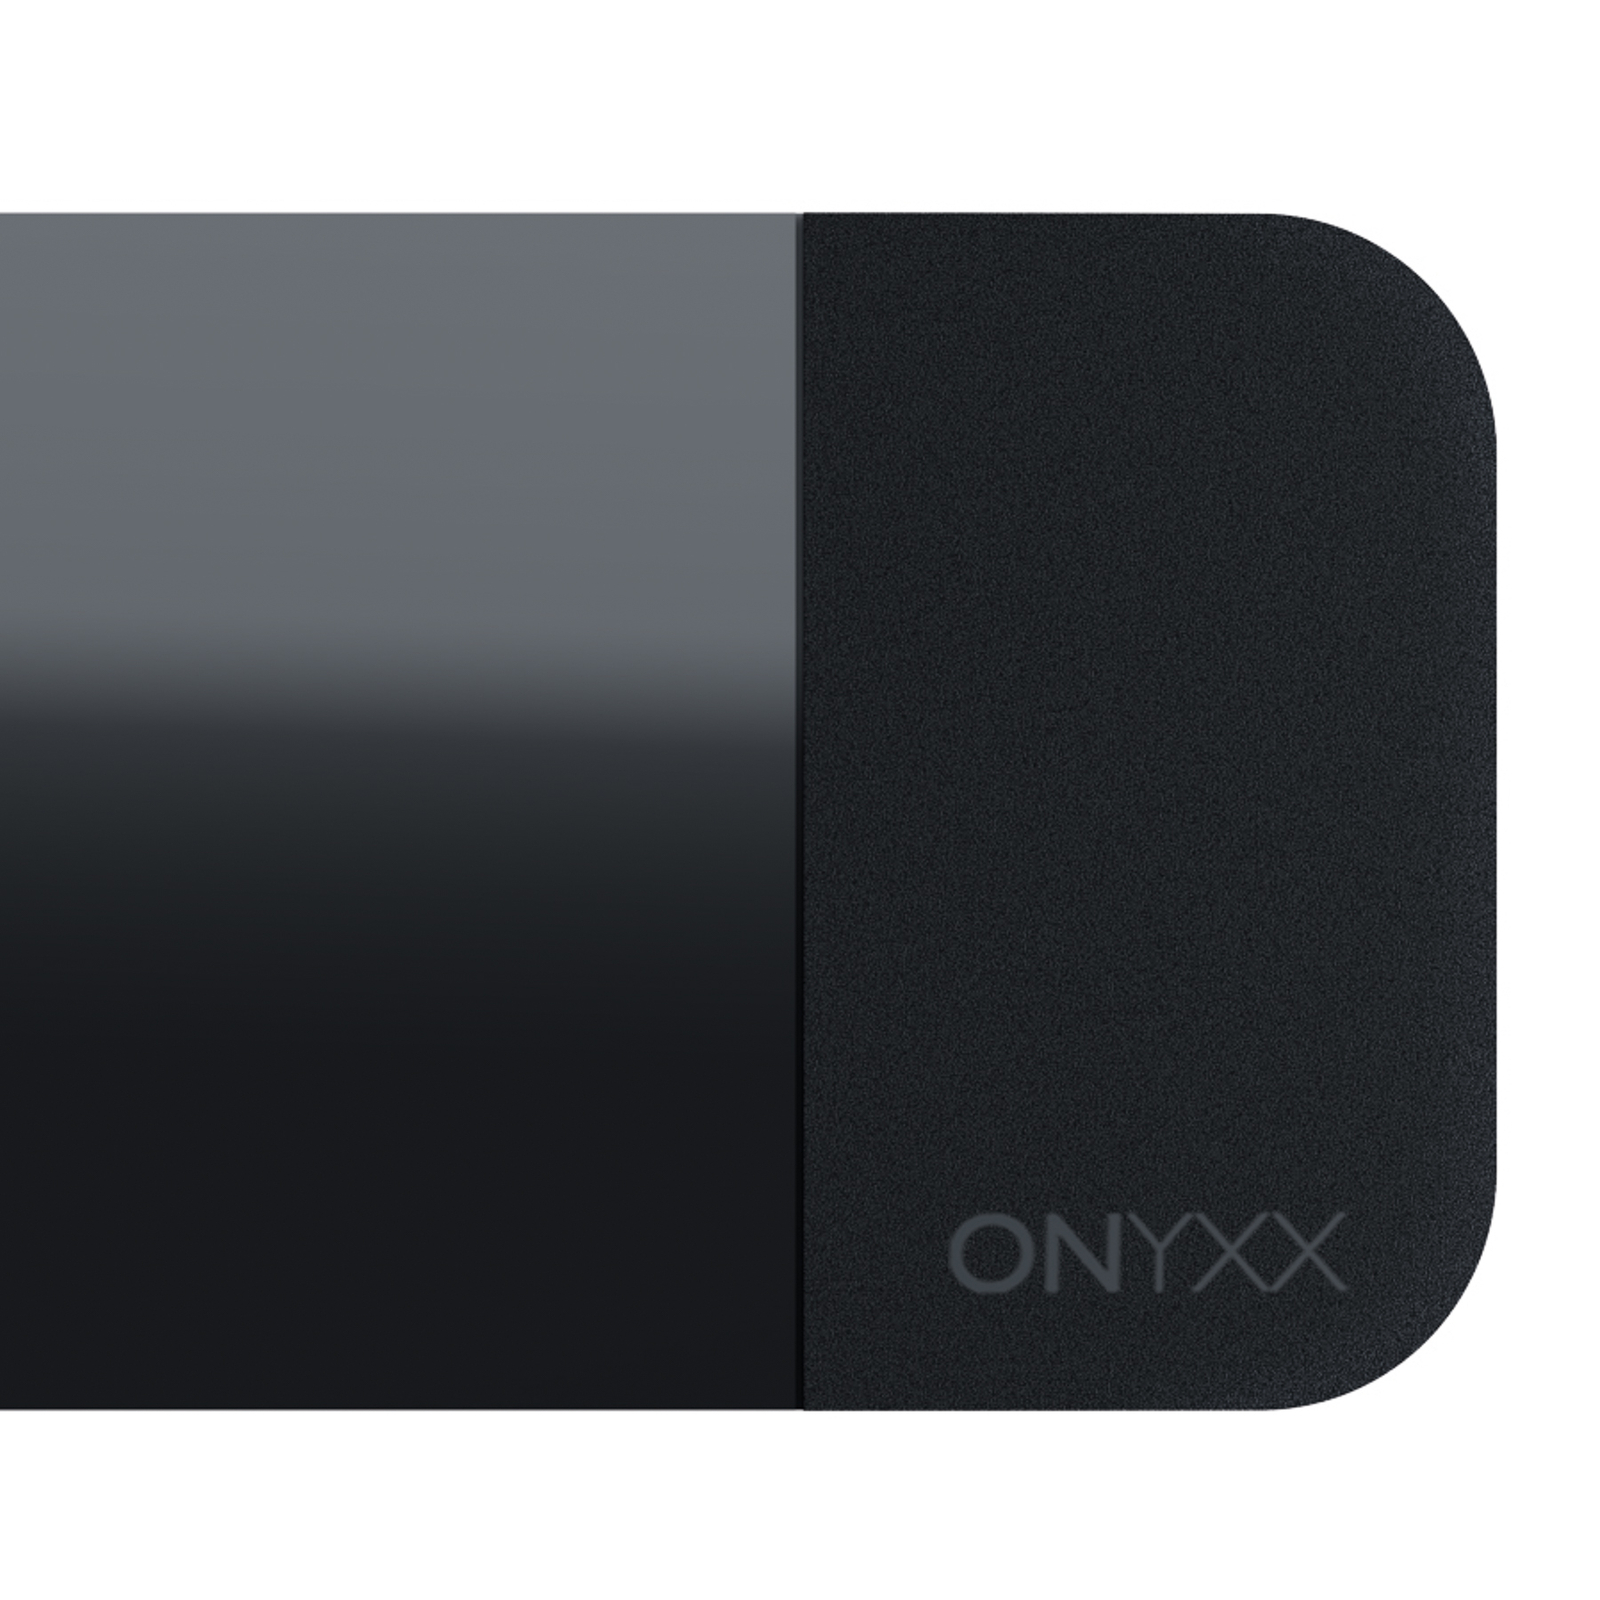 GRIMMEISEN Onyxx Linea Pro pendant black/black